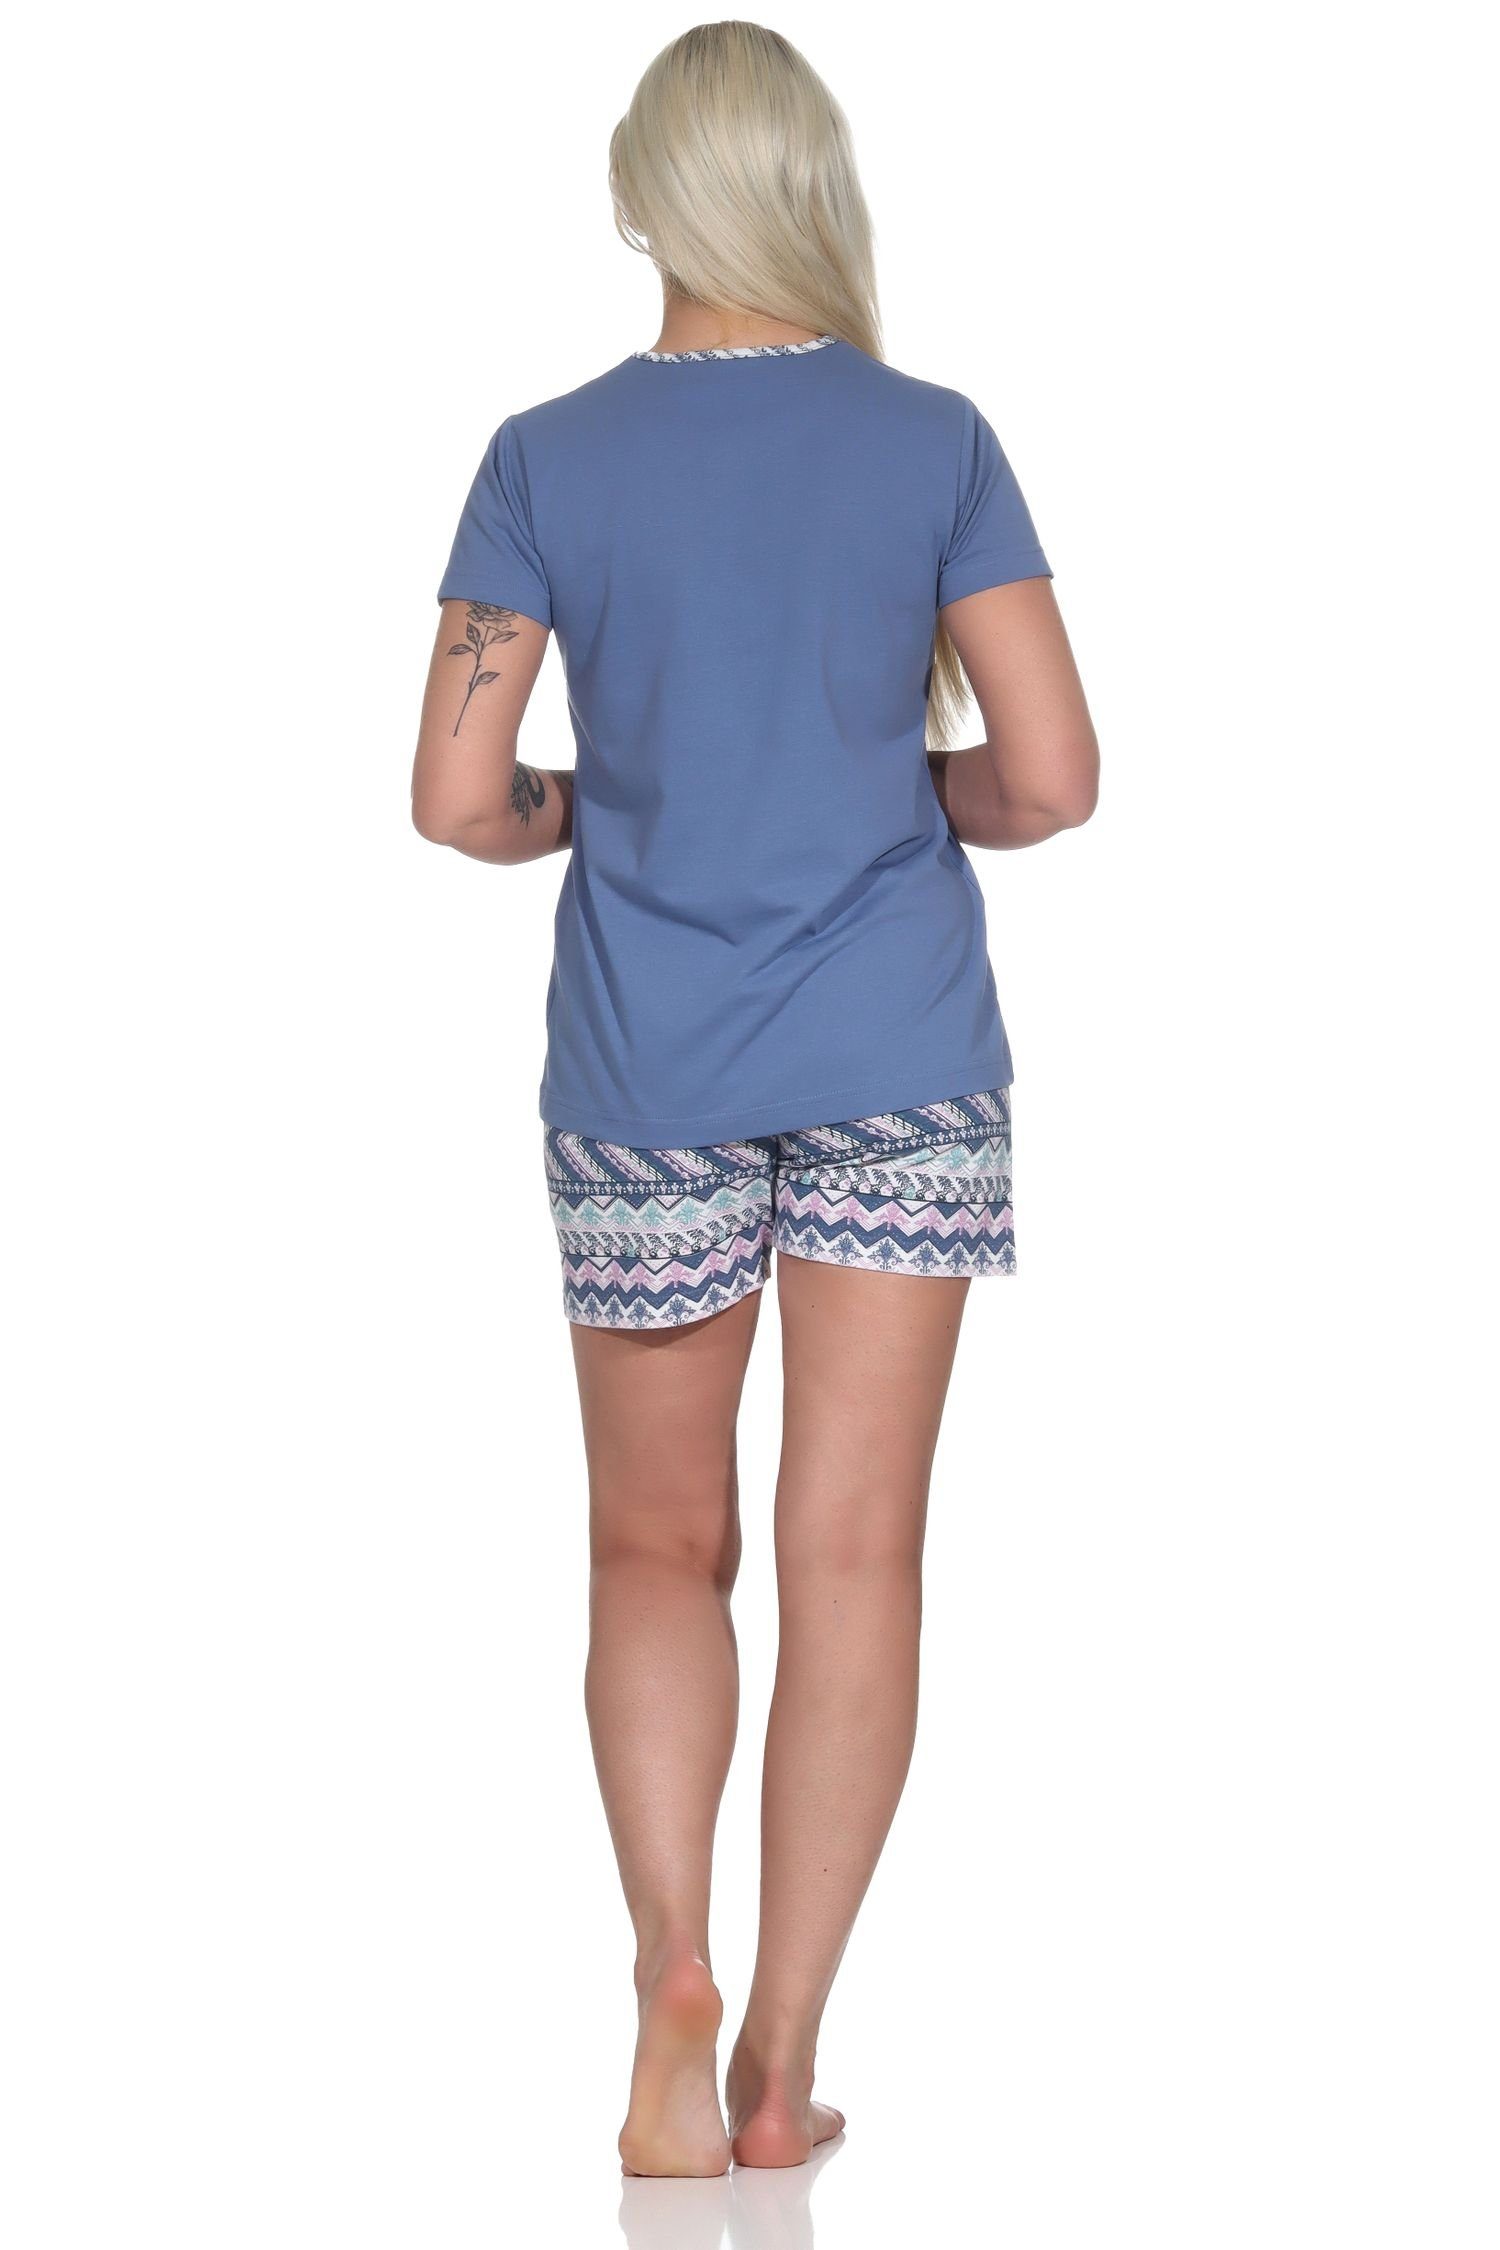 Ethno-Style Normann Damen blau Verspielter Shorty Pyjama Schlafanzug, Pyjama im kurzarm